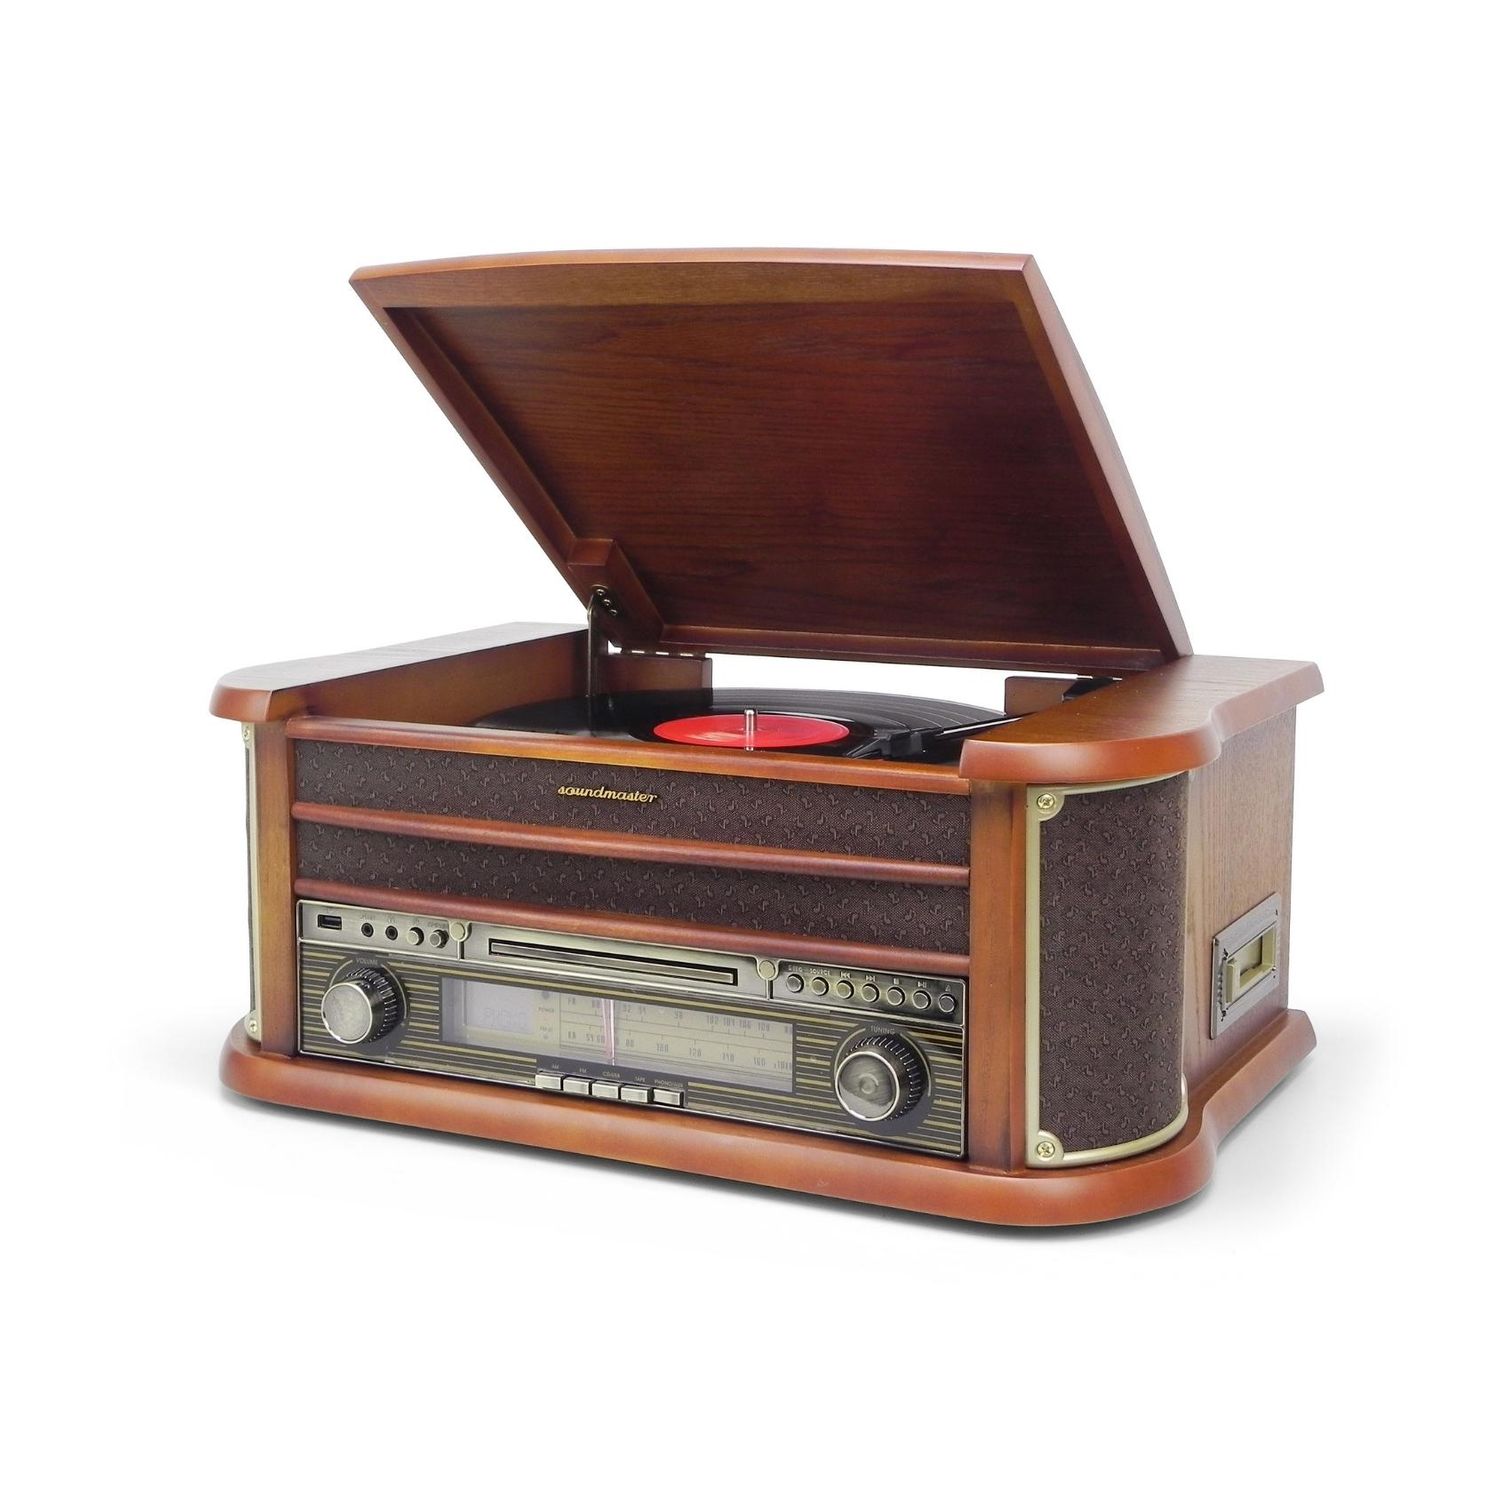 Soundmaster NR540 nostalgic compact system record player CD-MP3 USB encoding cassette player stereo system